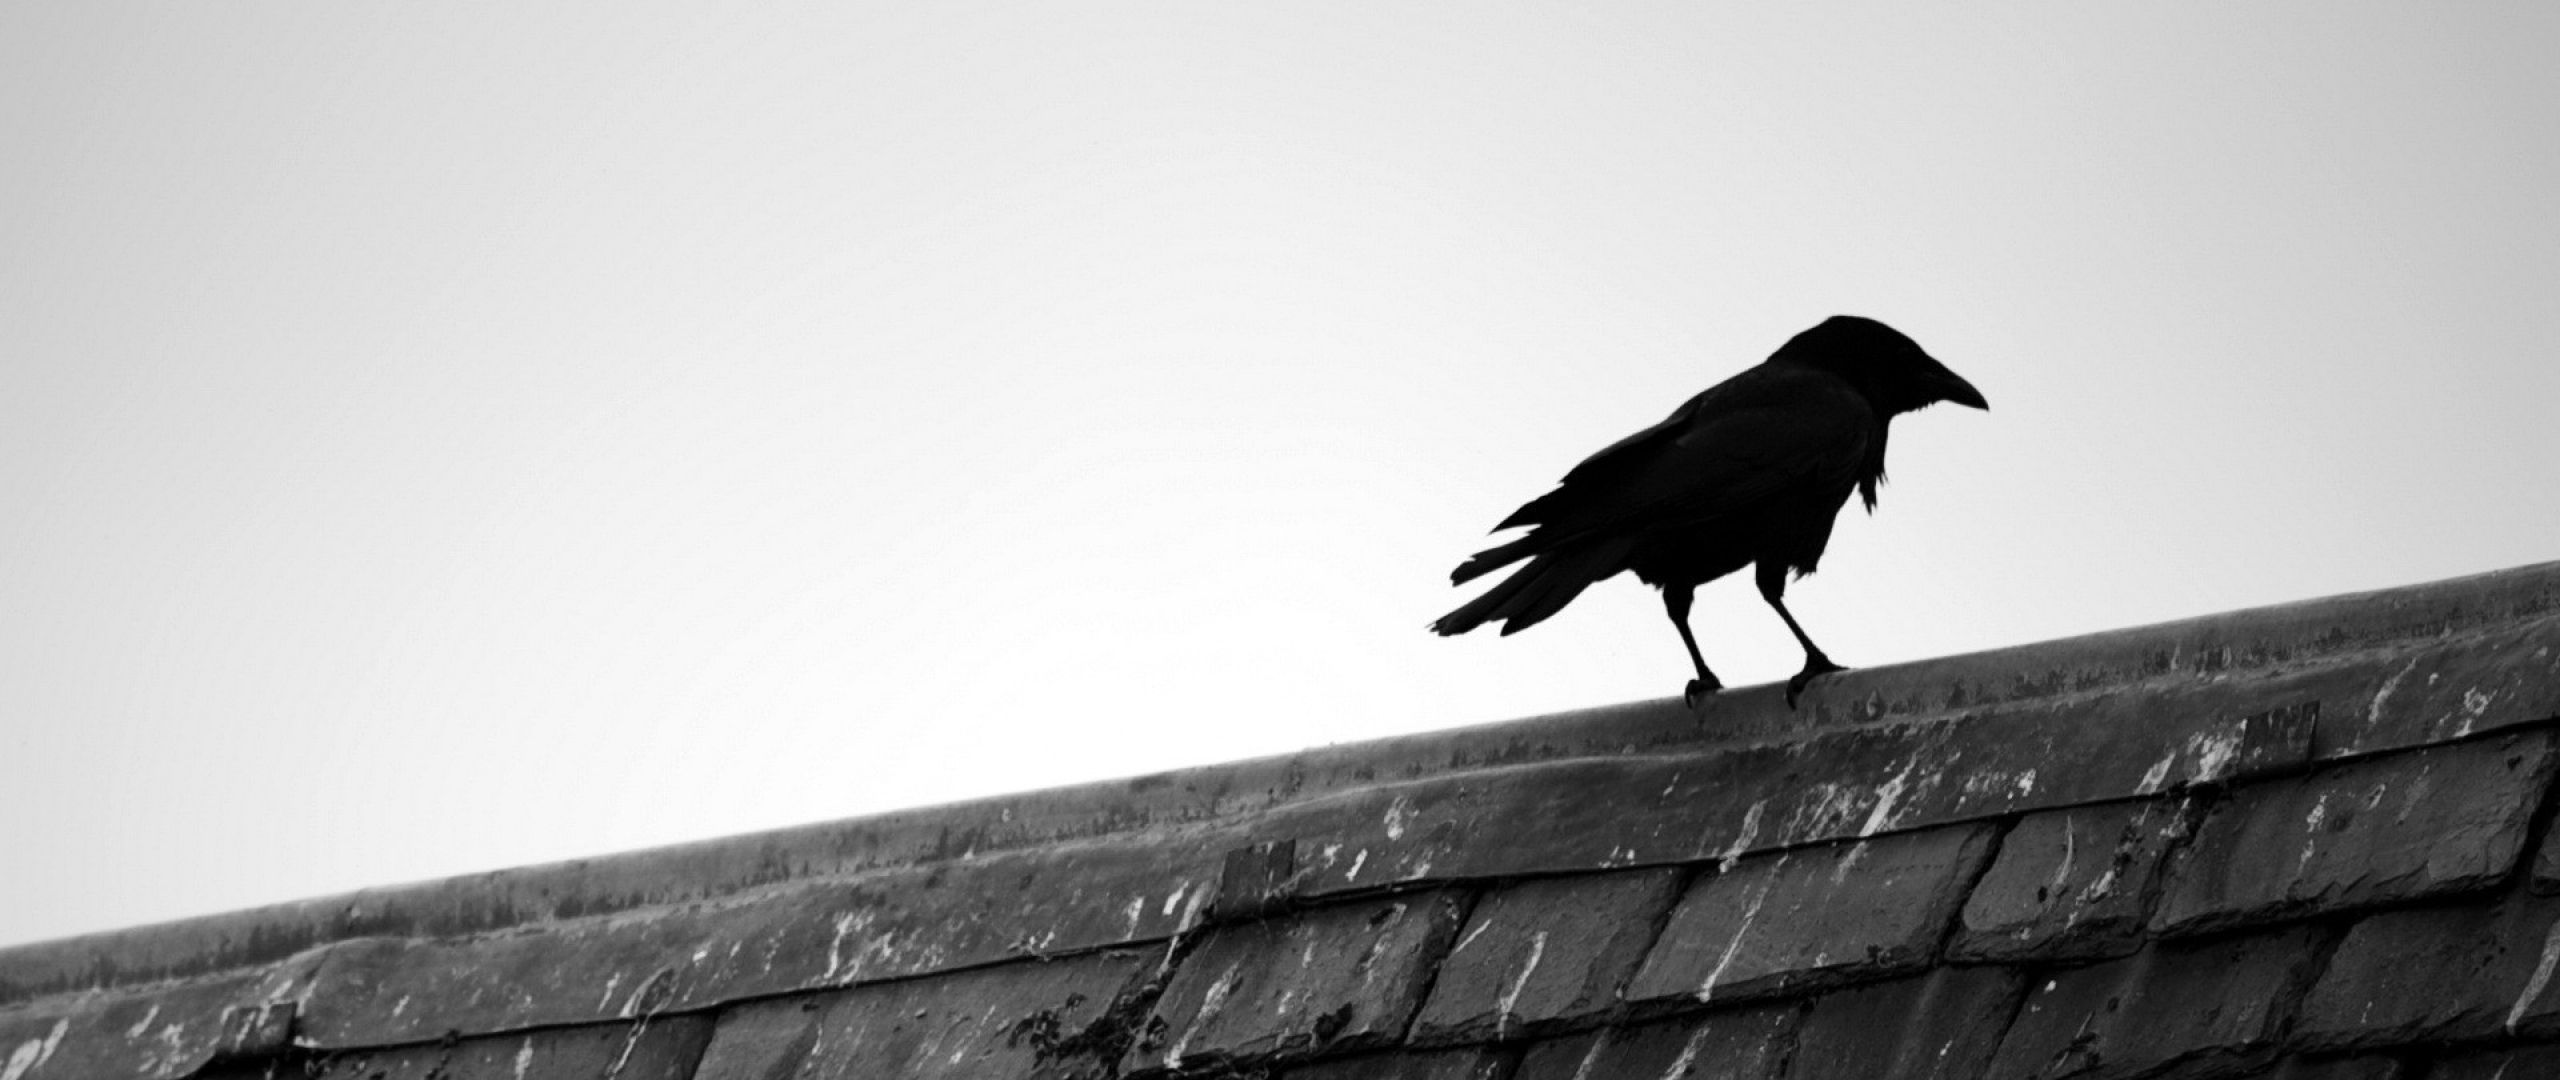 Download Wallpaper 2560x1080 Raven, Bird, Roof, Sky, Black white ...